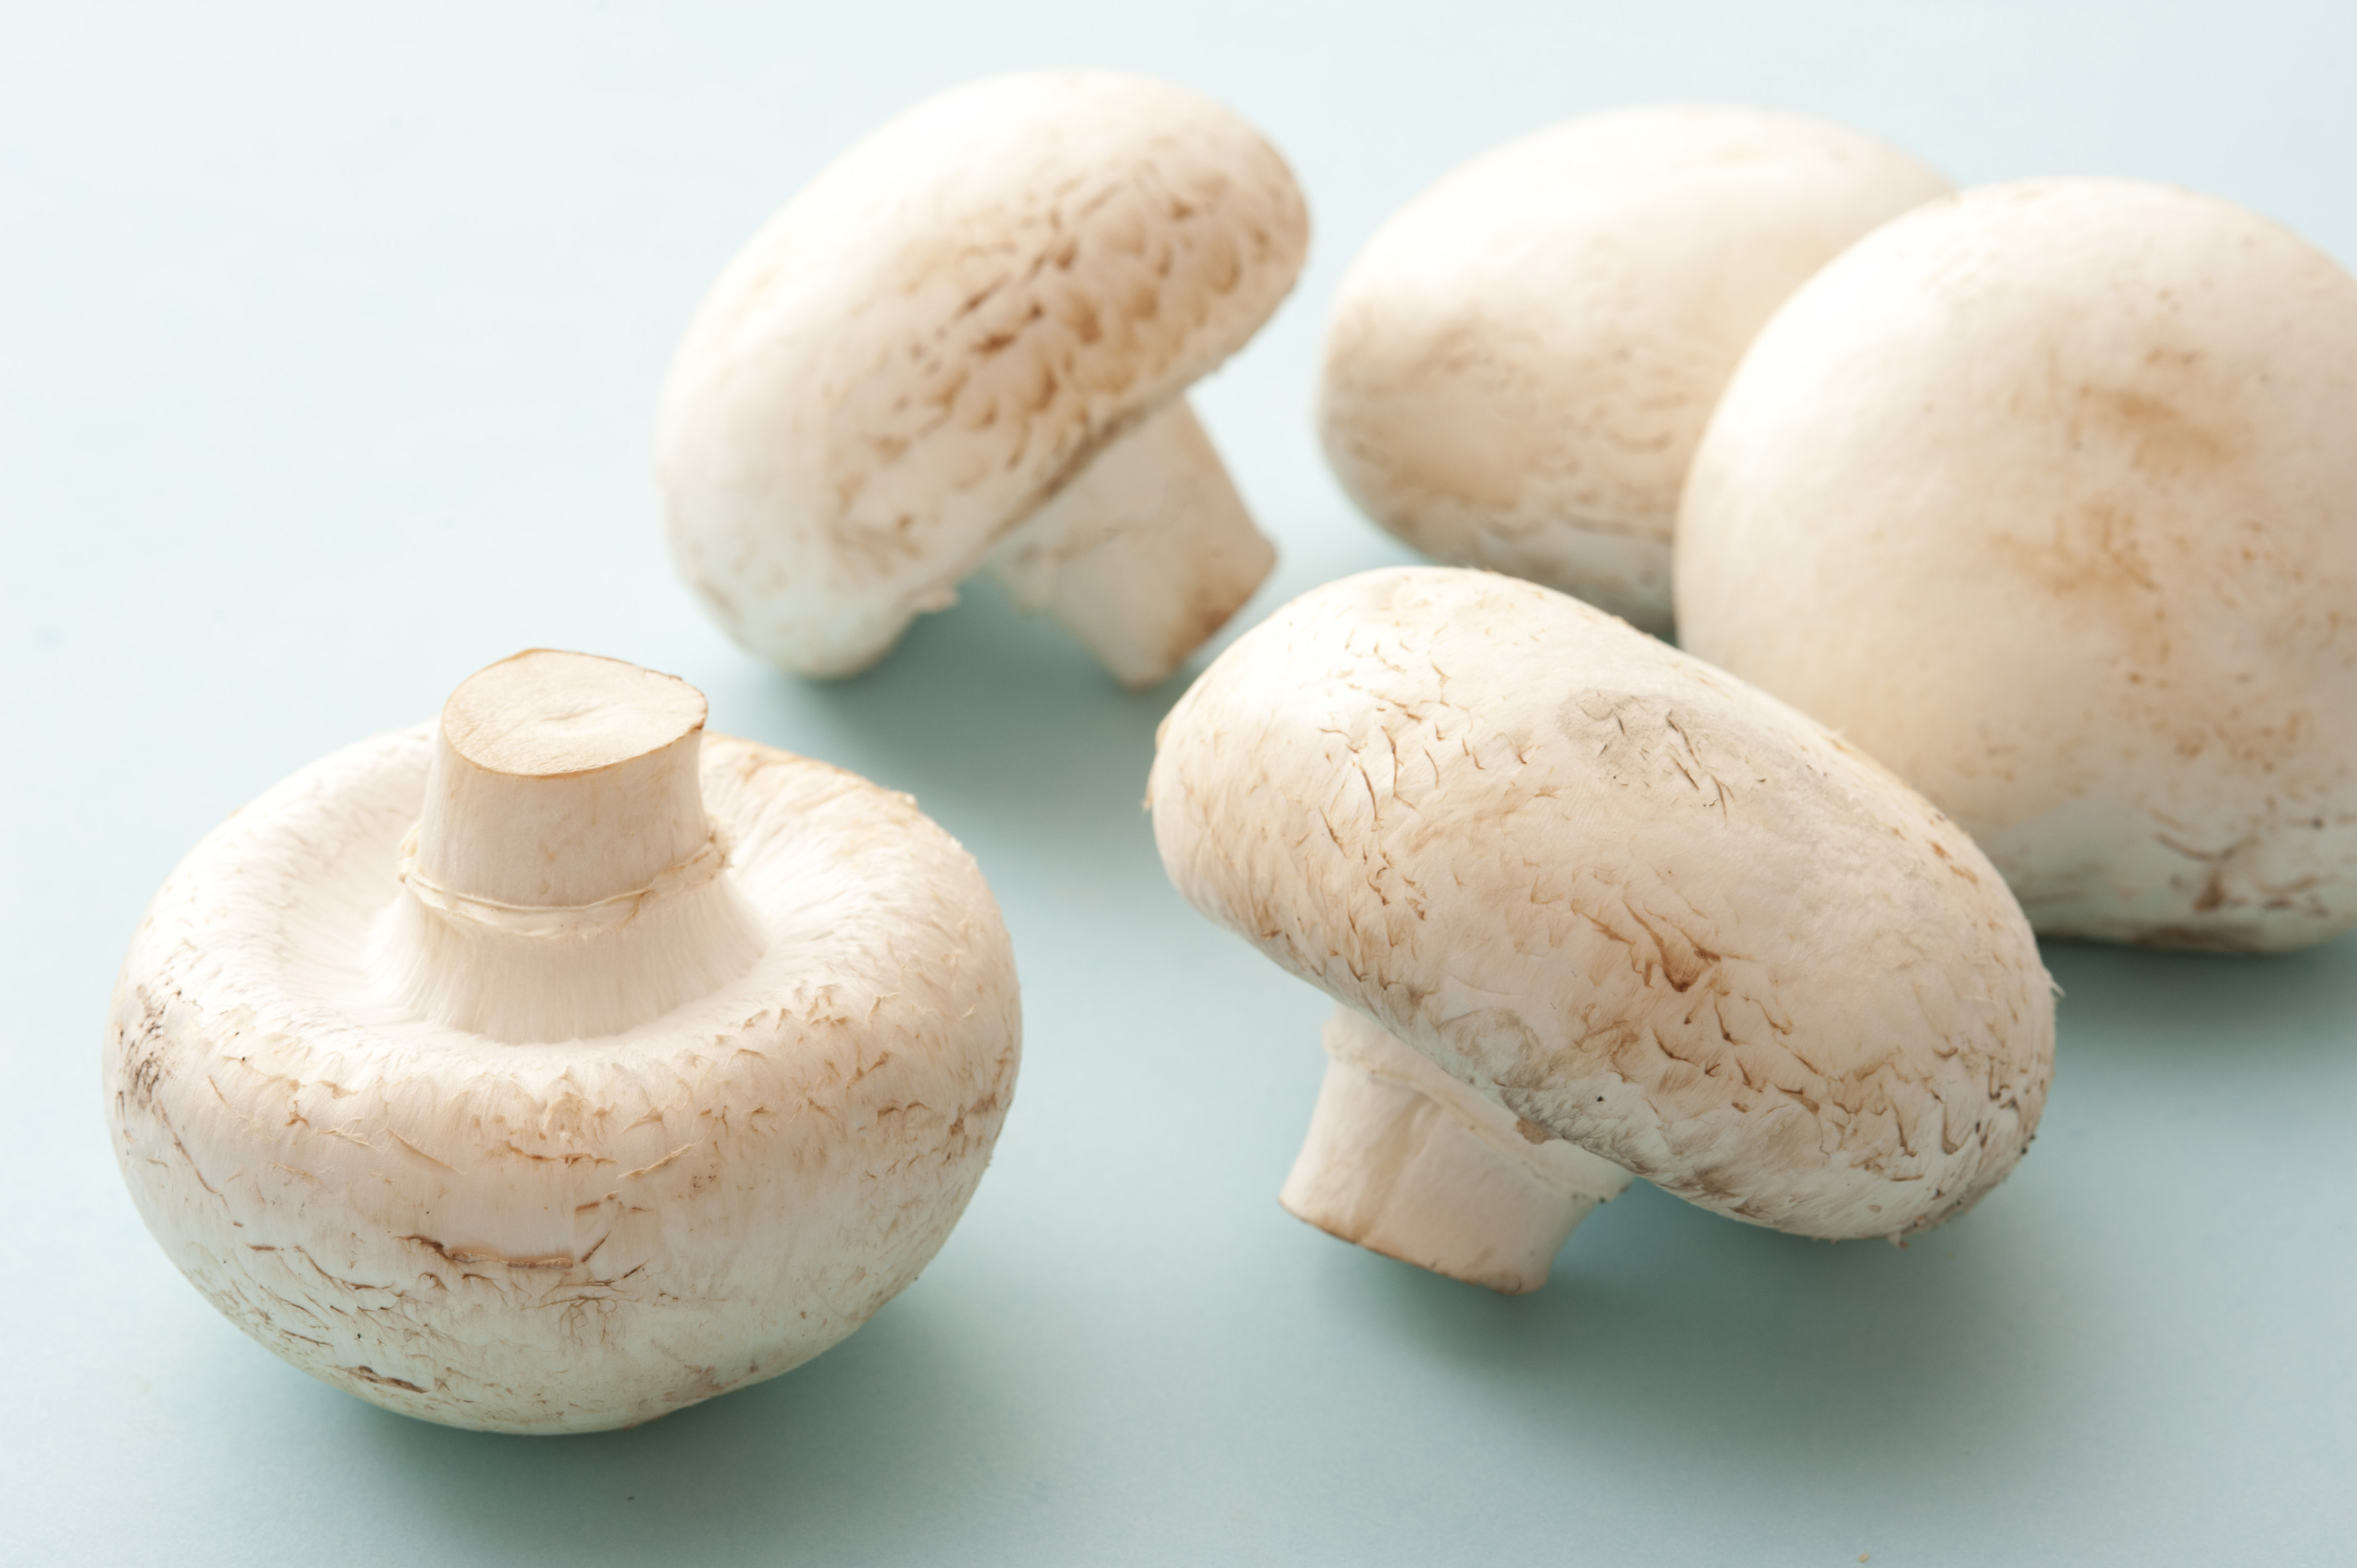 Fresh raw white button mushrooms - Free Stock Image